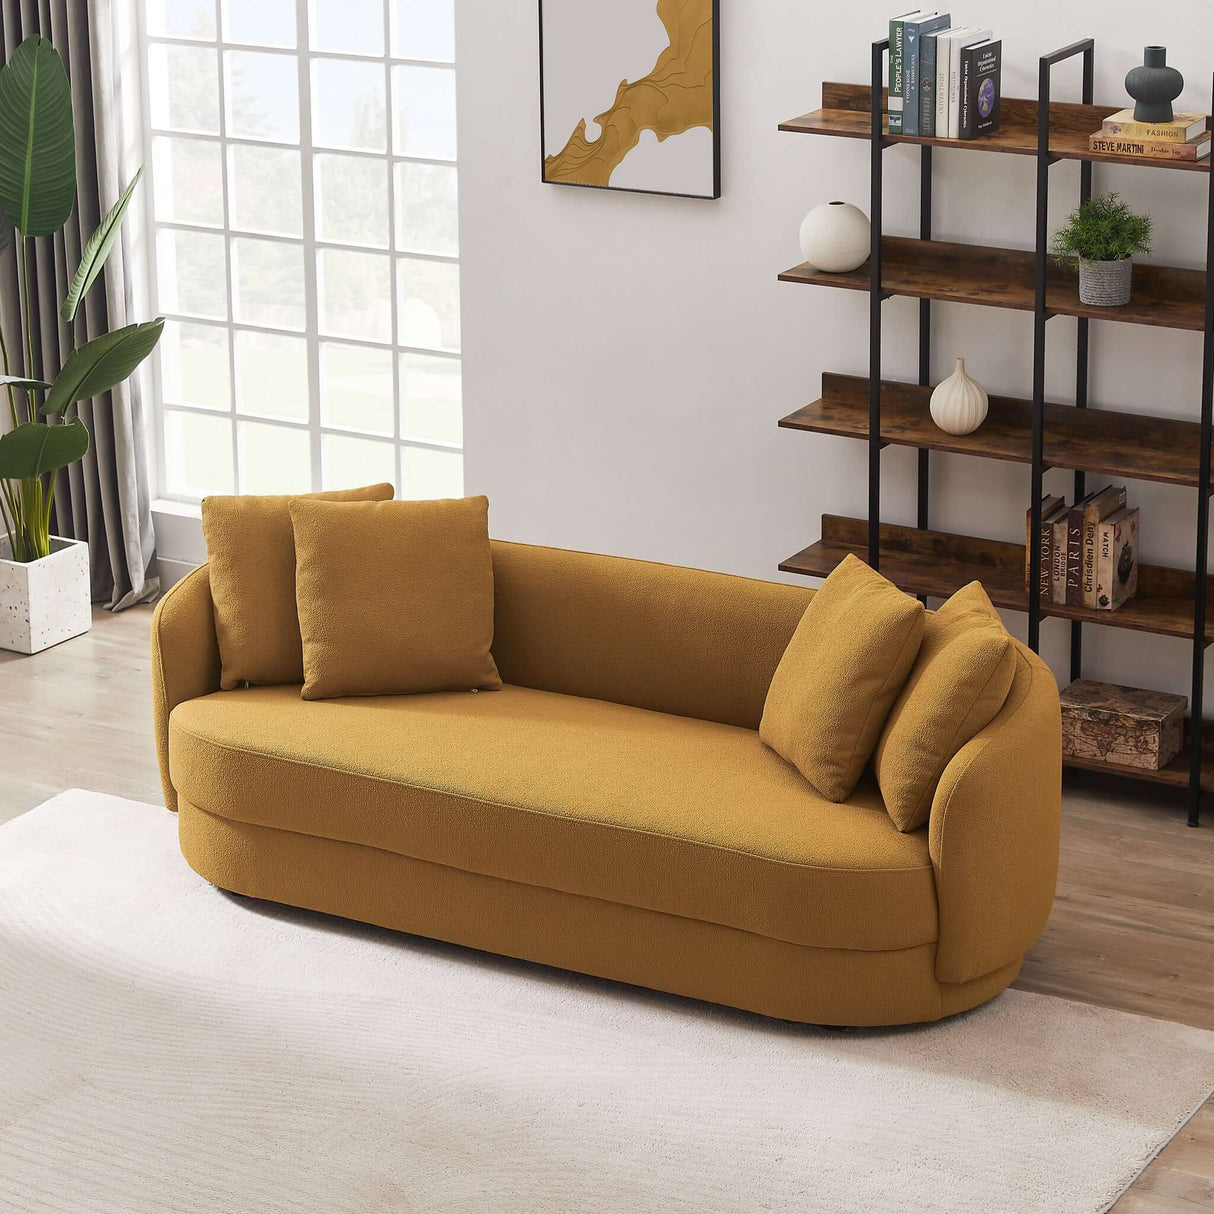 Yellow sofa living room